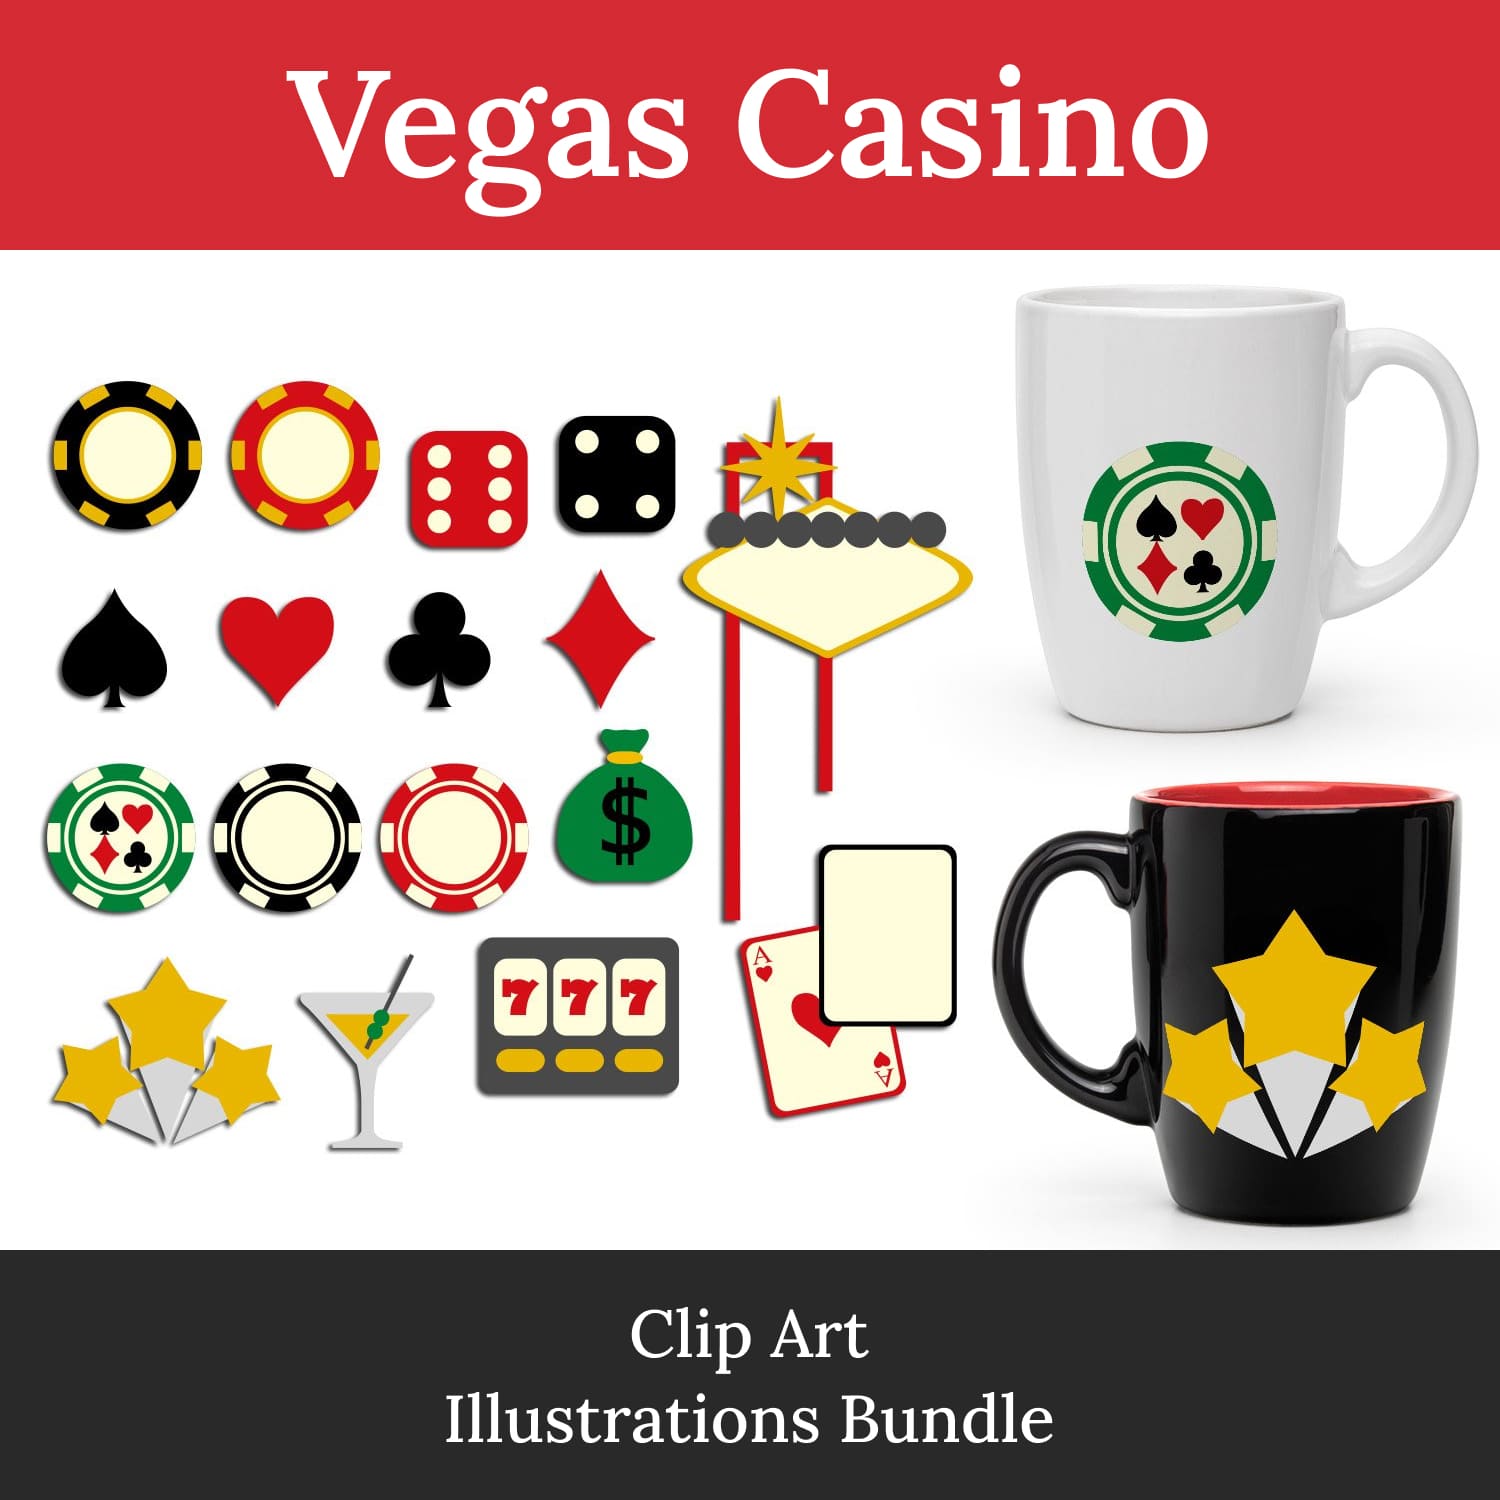 Vegas Casino Clip Art Illustrations Bundle – MasterBundles